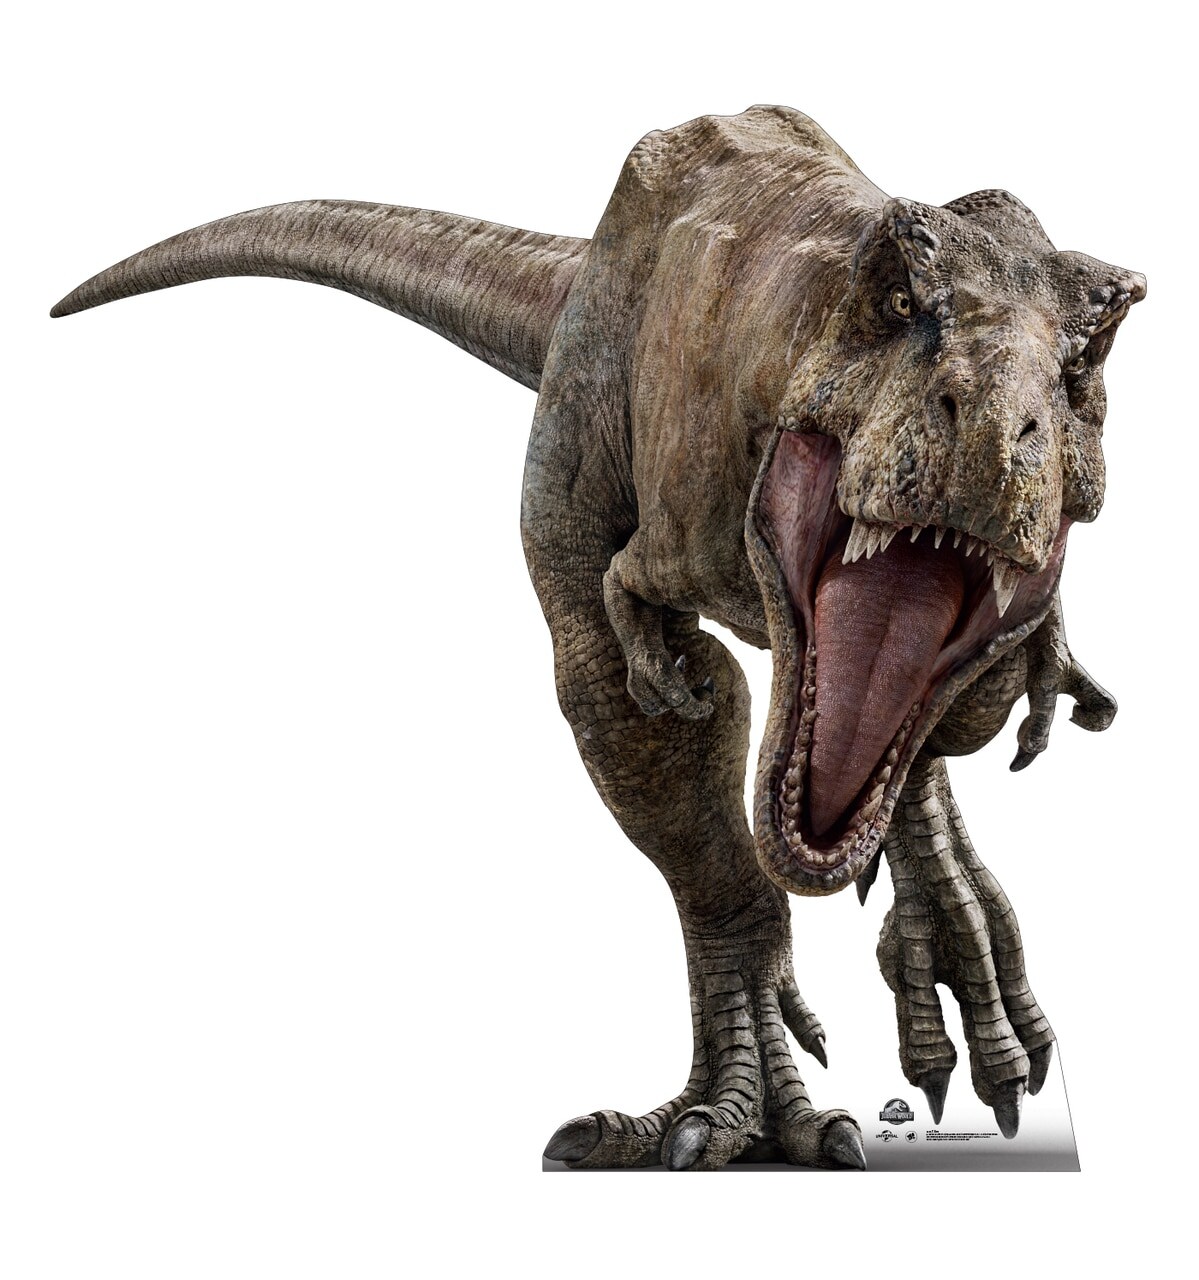 Jurassic Park/World T. Rex Drawing. by xXkierrabinghamXx on DeviantArt